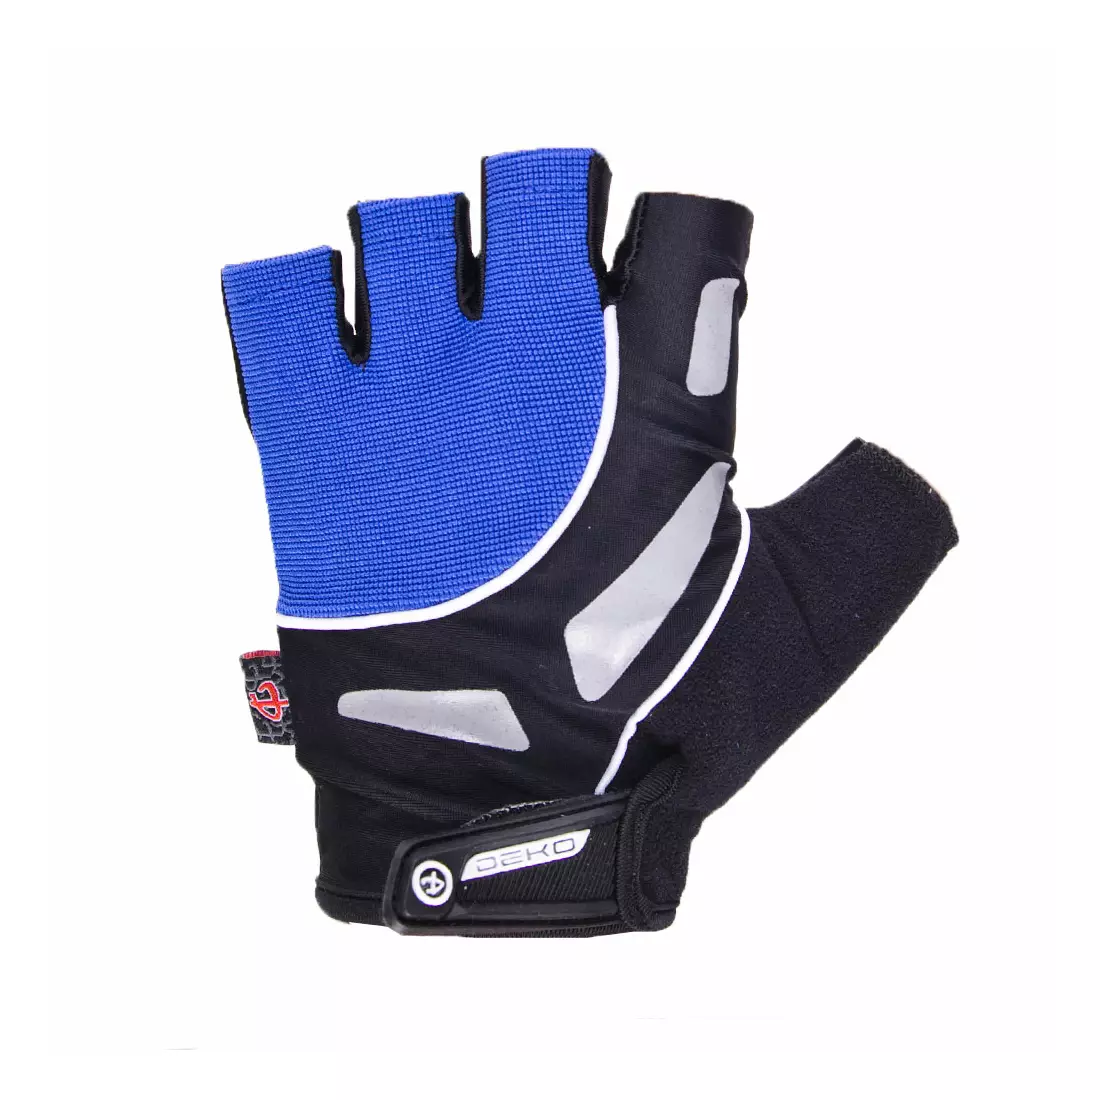 DEKO cycling gloves black DKSG-505